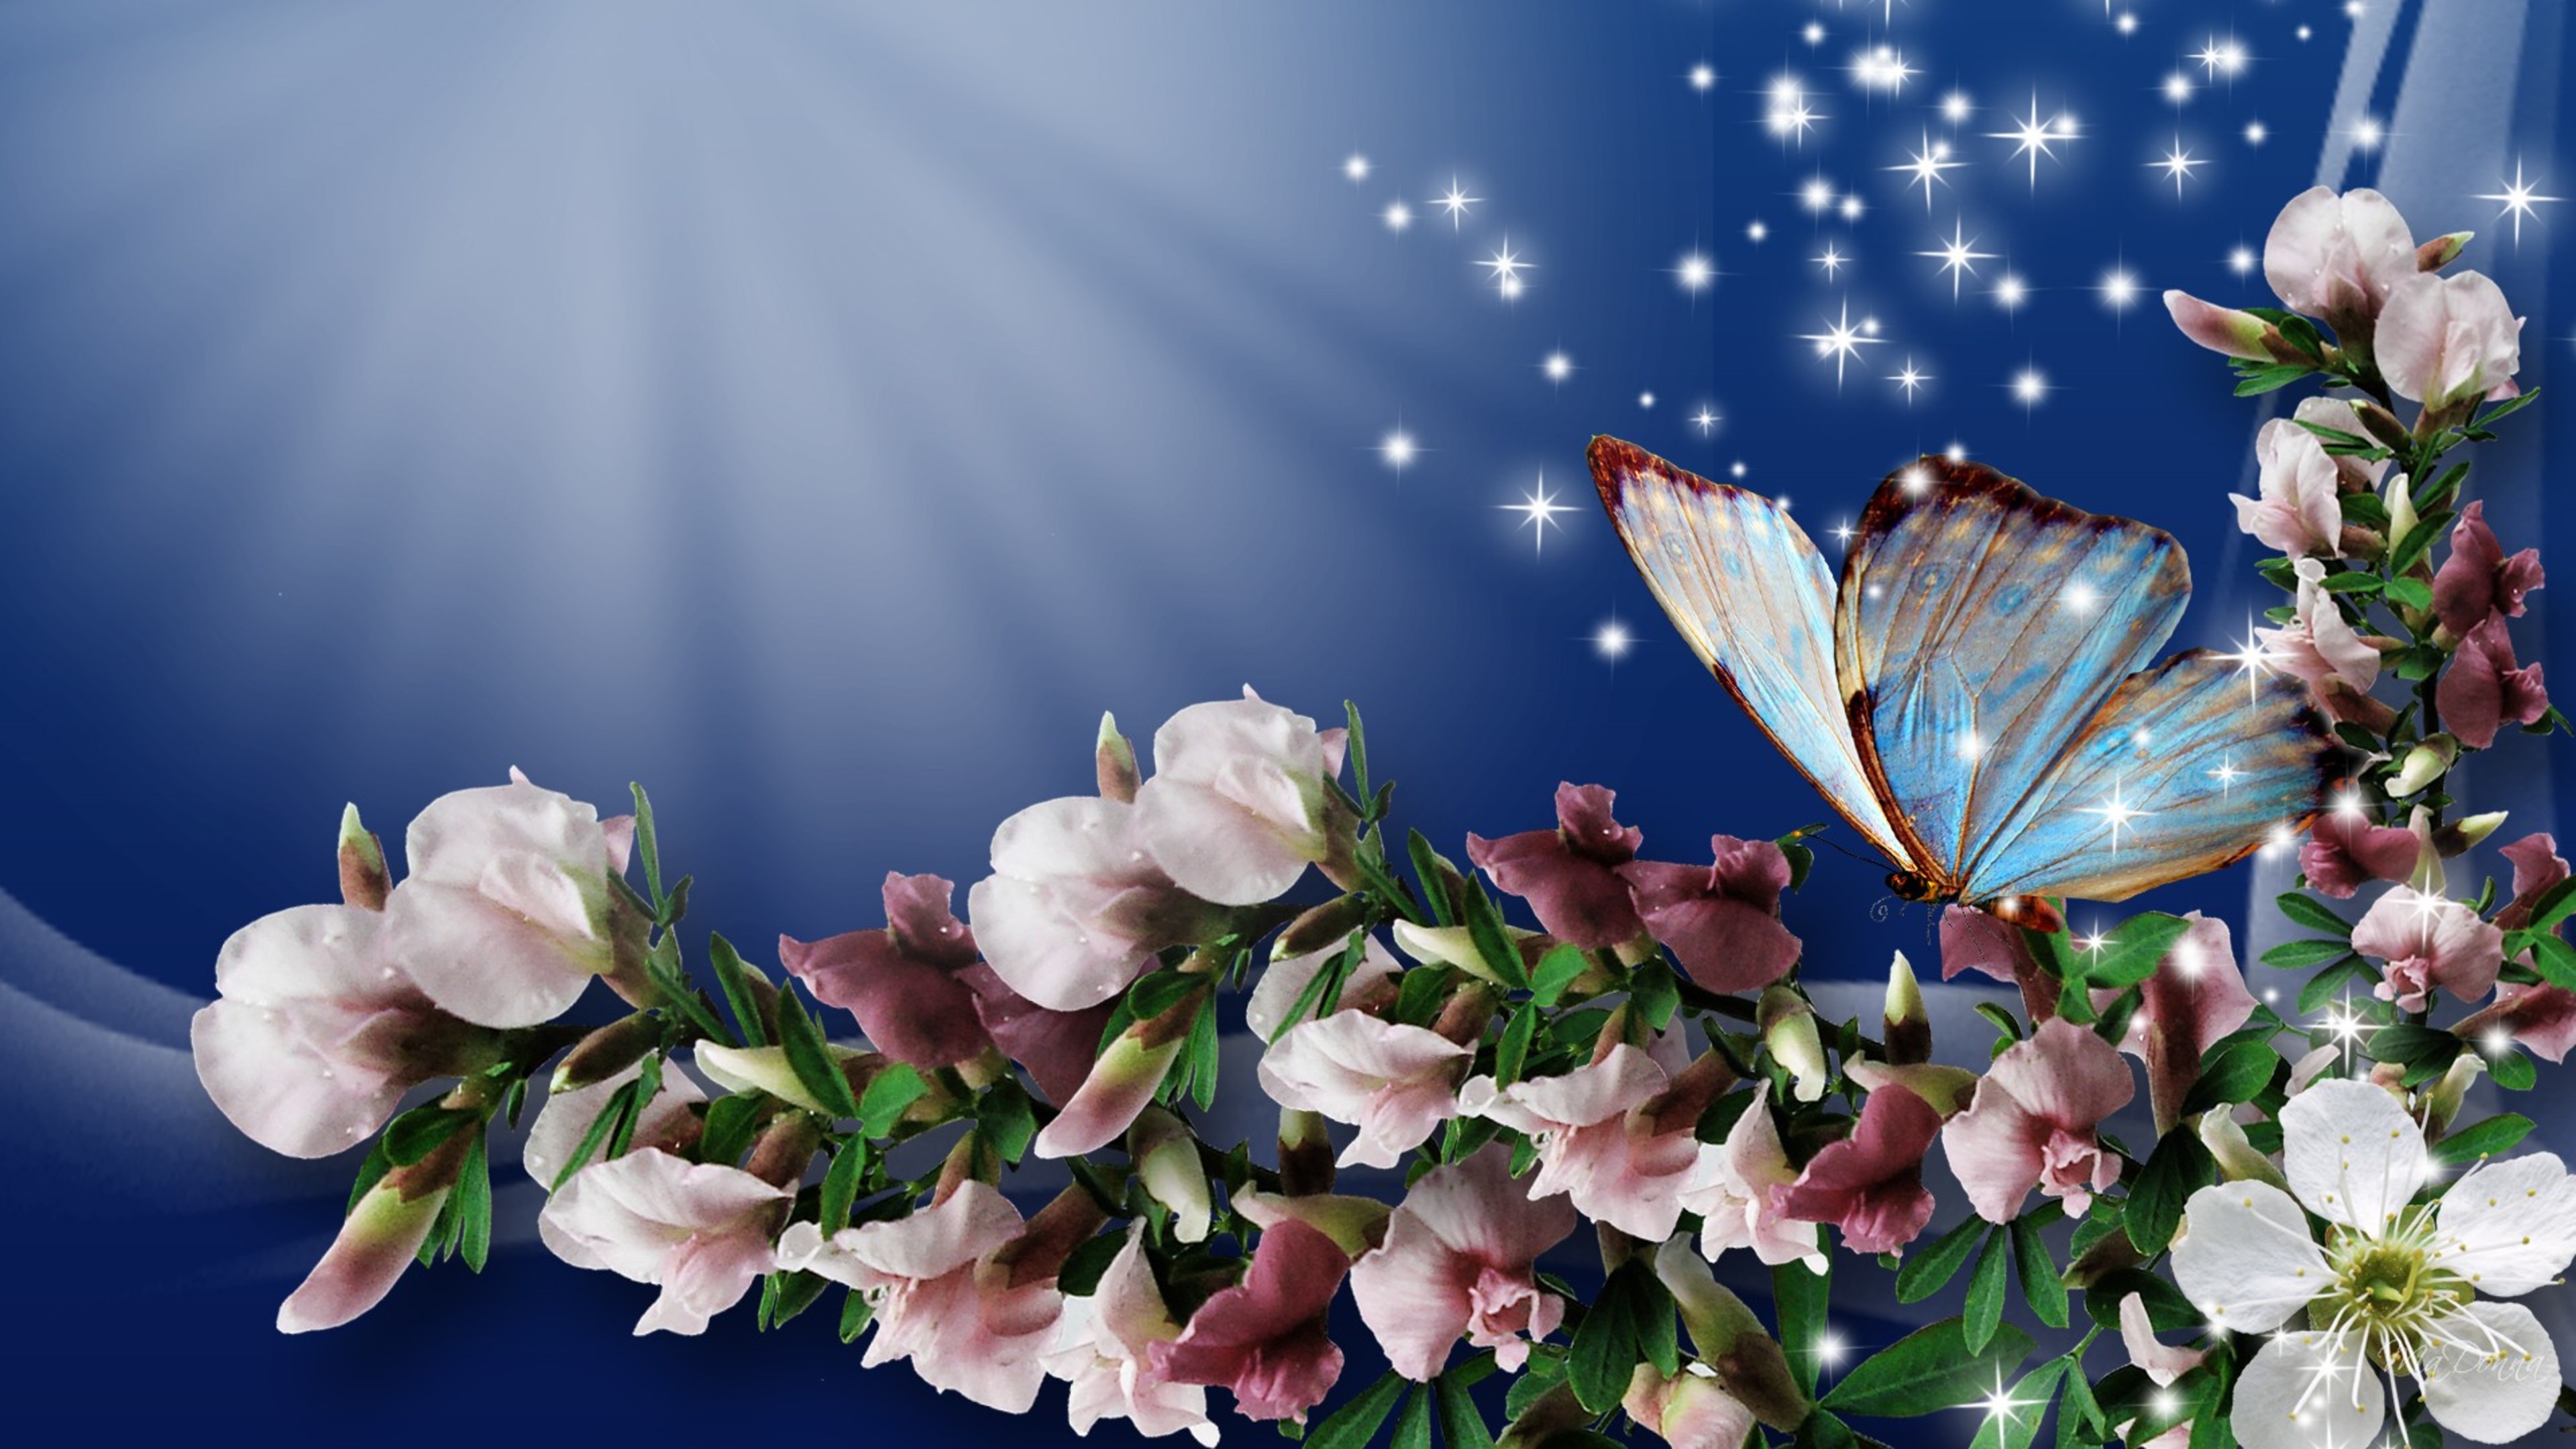 Butterflies And Flowers Wallpaper - Spring Flowers And Butterflies - HD Wallpaper 